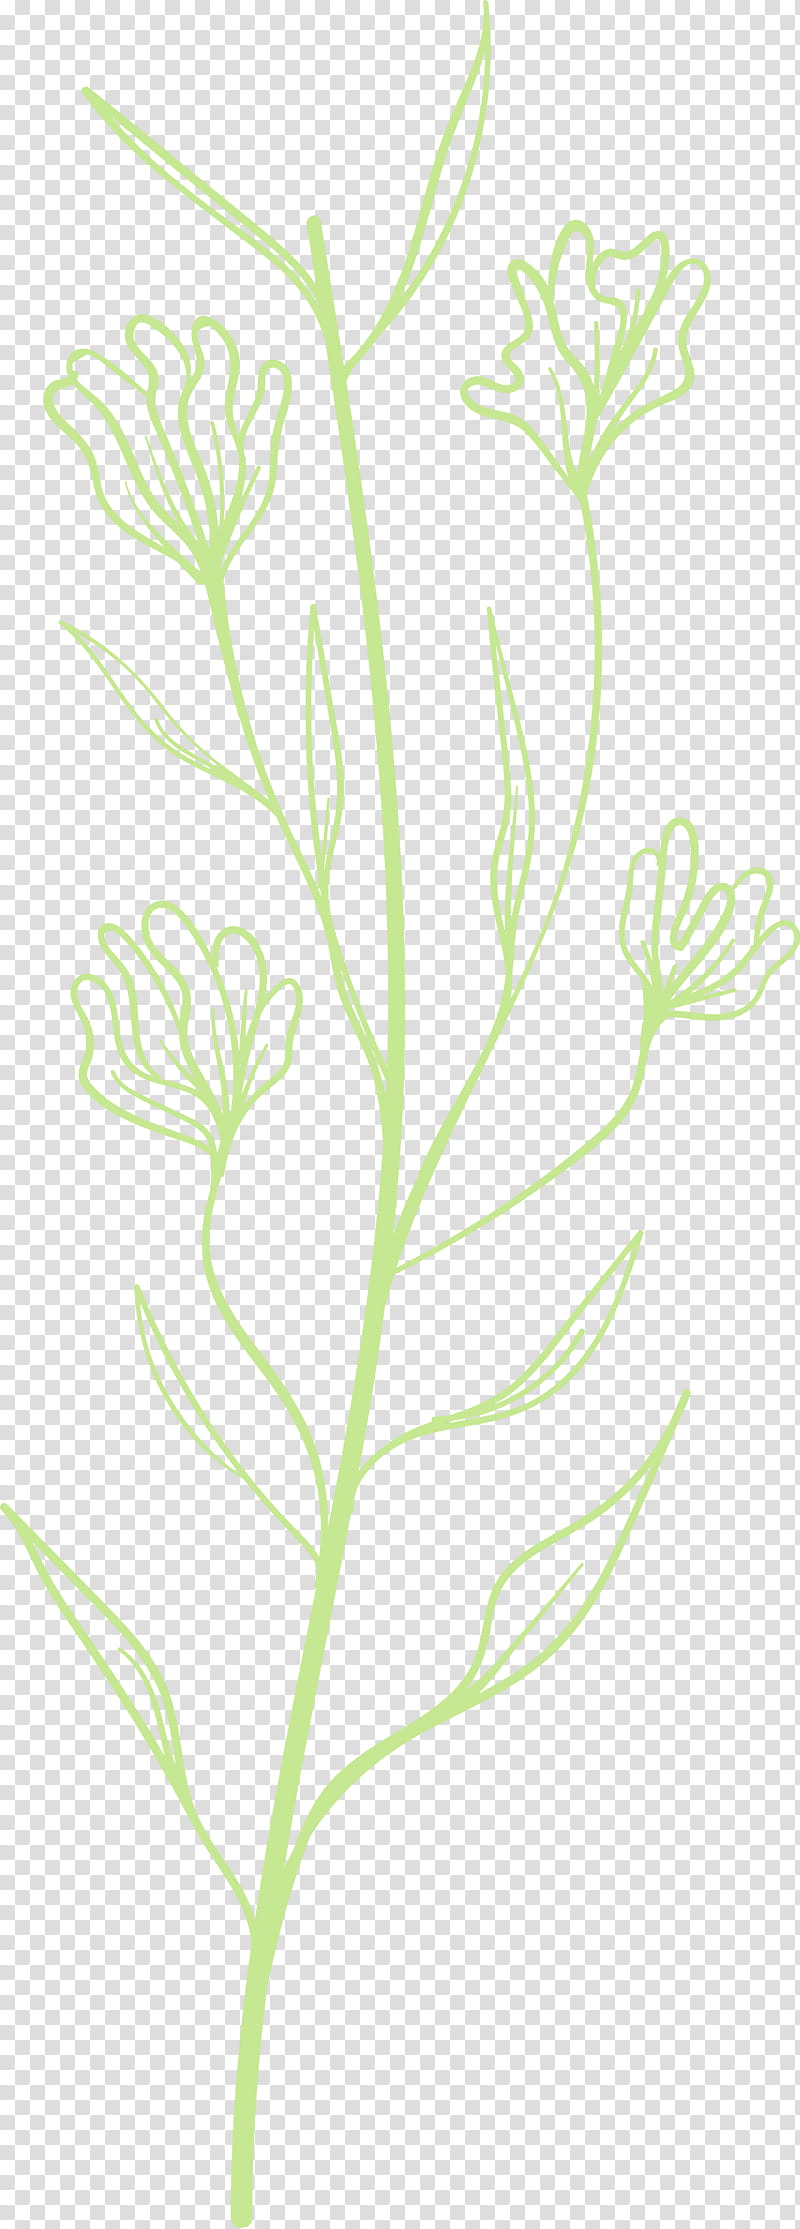 simple leaf simple leaf drawing simple leaf outline, Twig, Plant Stem, Herbaceous Plant, Petal, Leaf Vegetable, Grasses, Paperplant transparent background PNG clipart